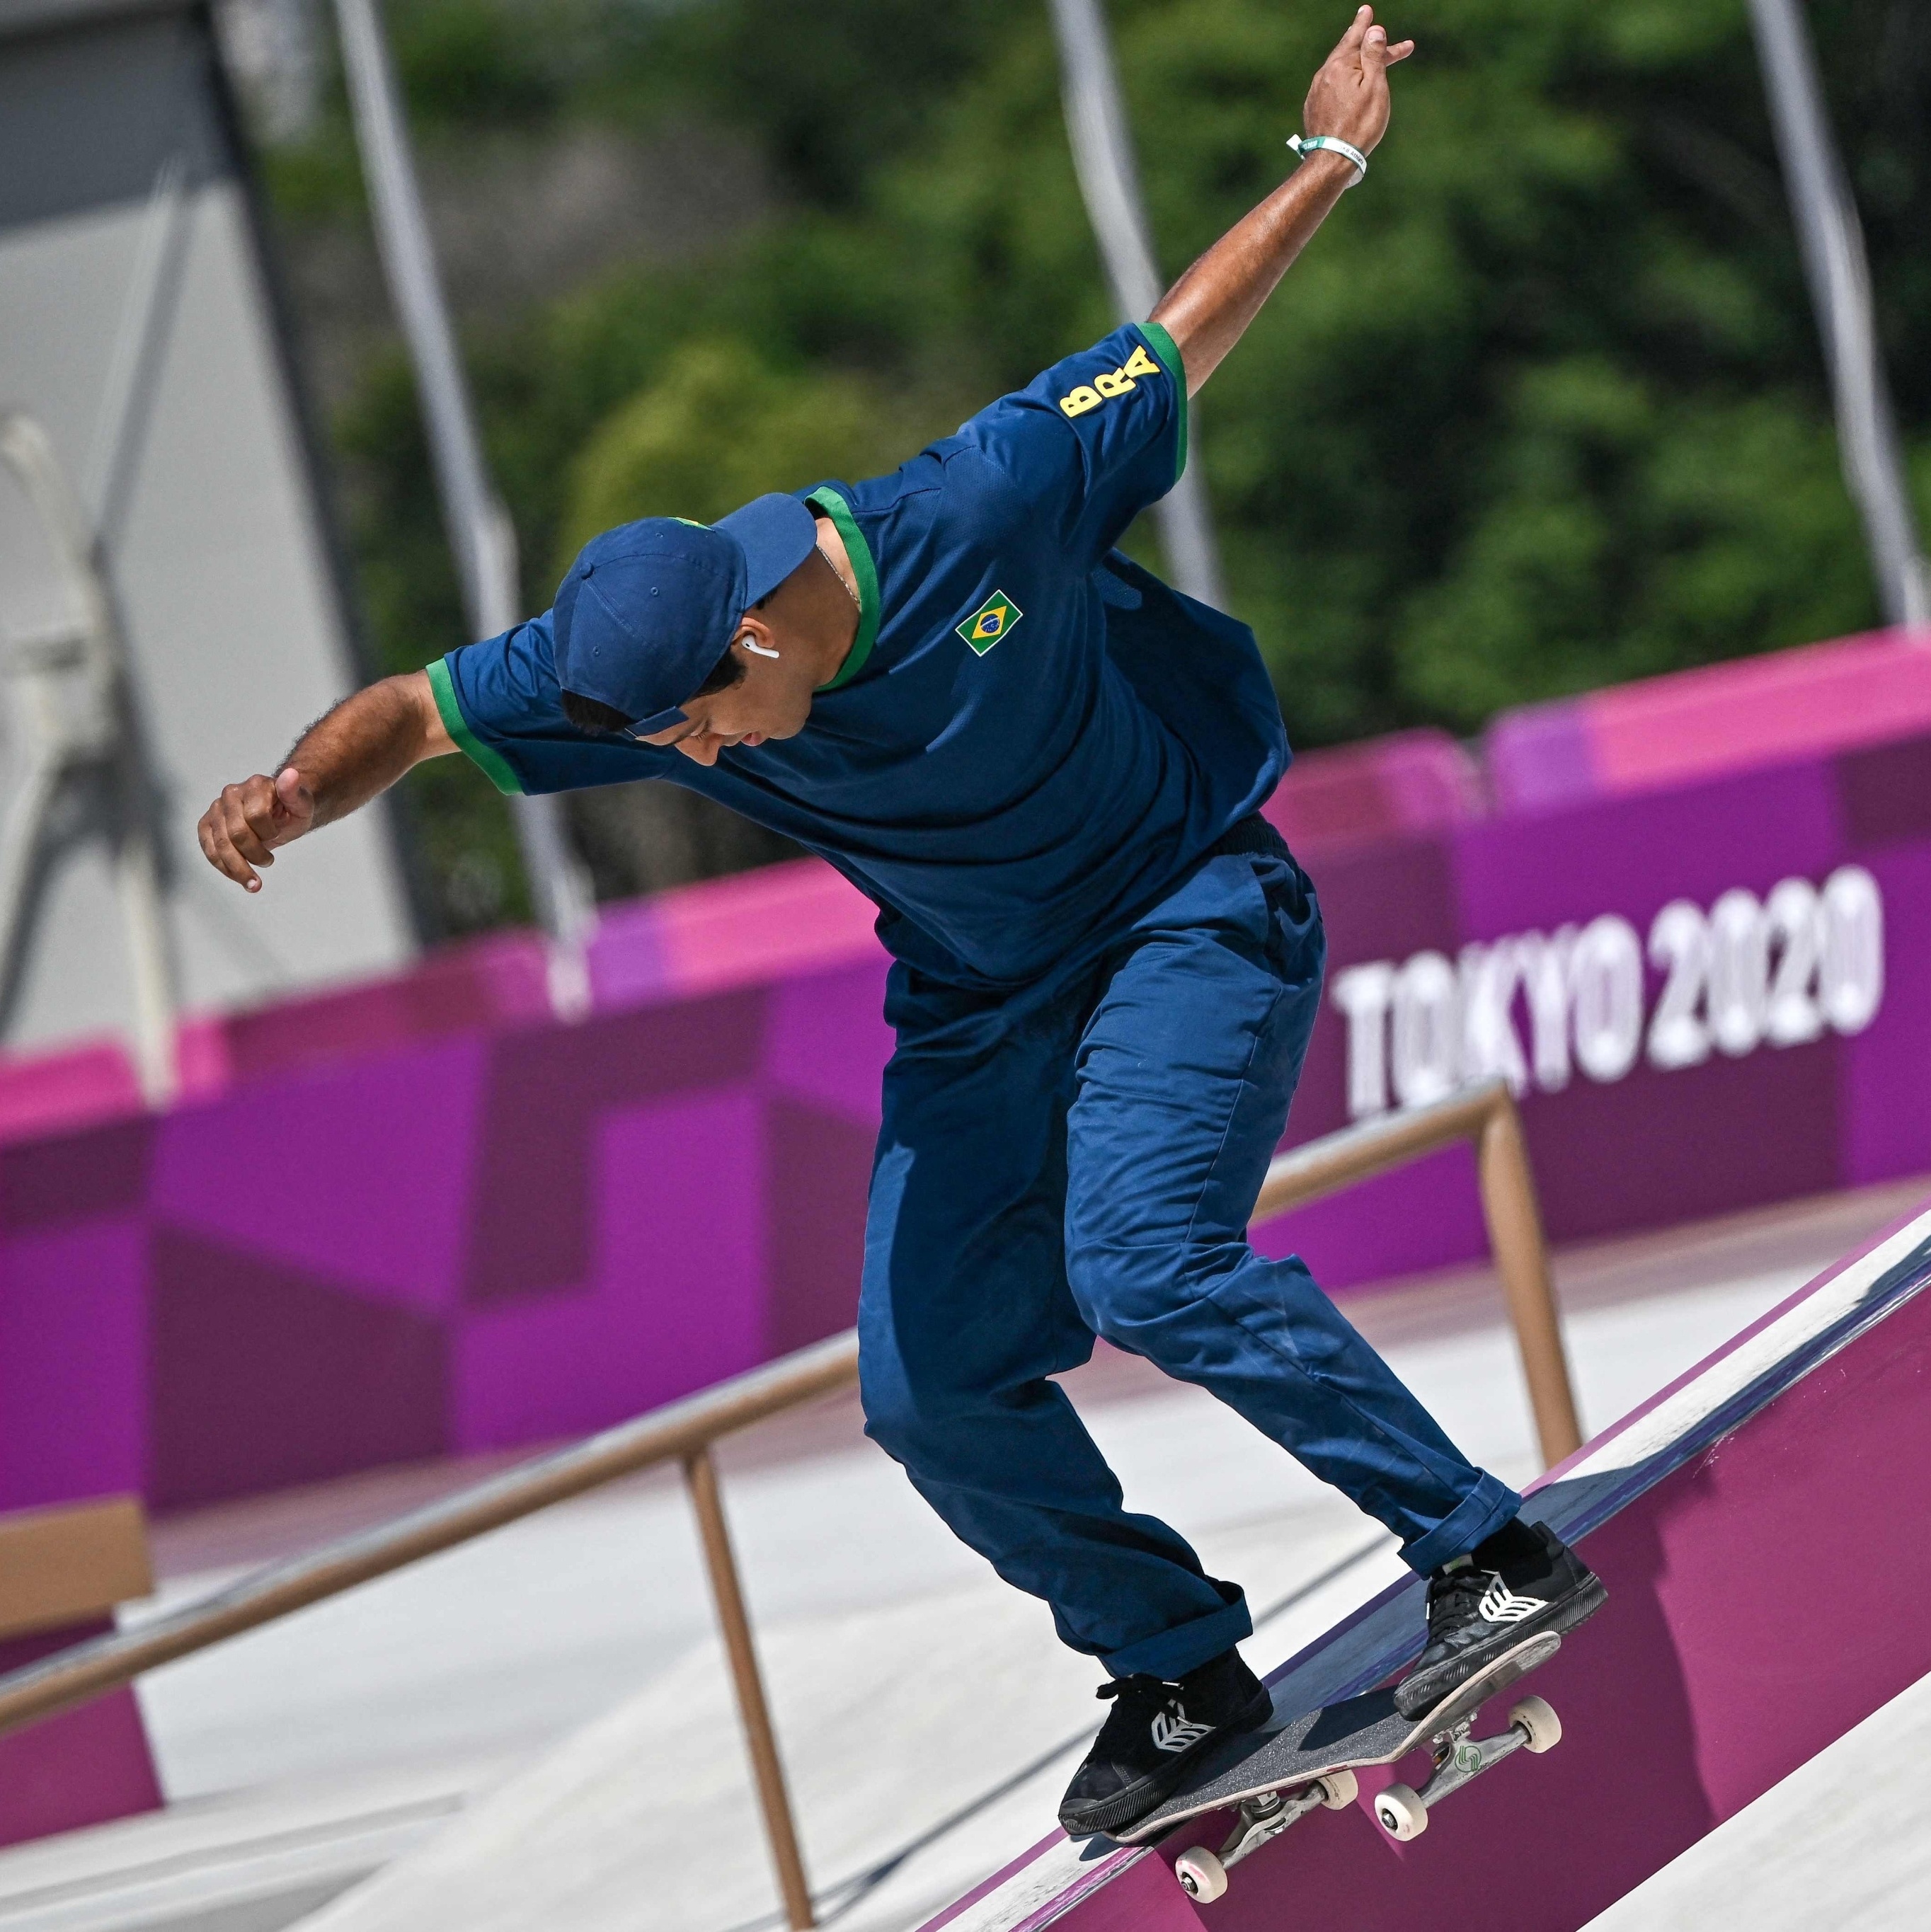 SporTV2 exibe torneios de skate após sucesso na Olimpíada